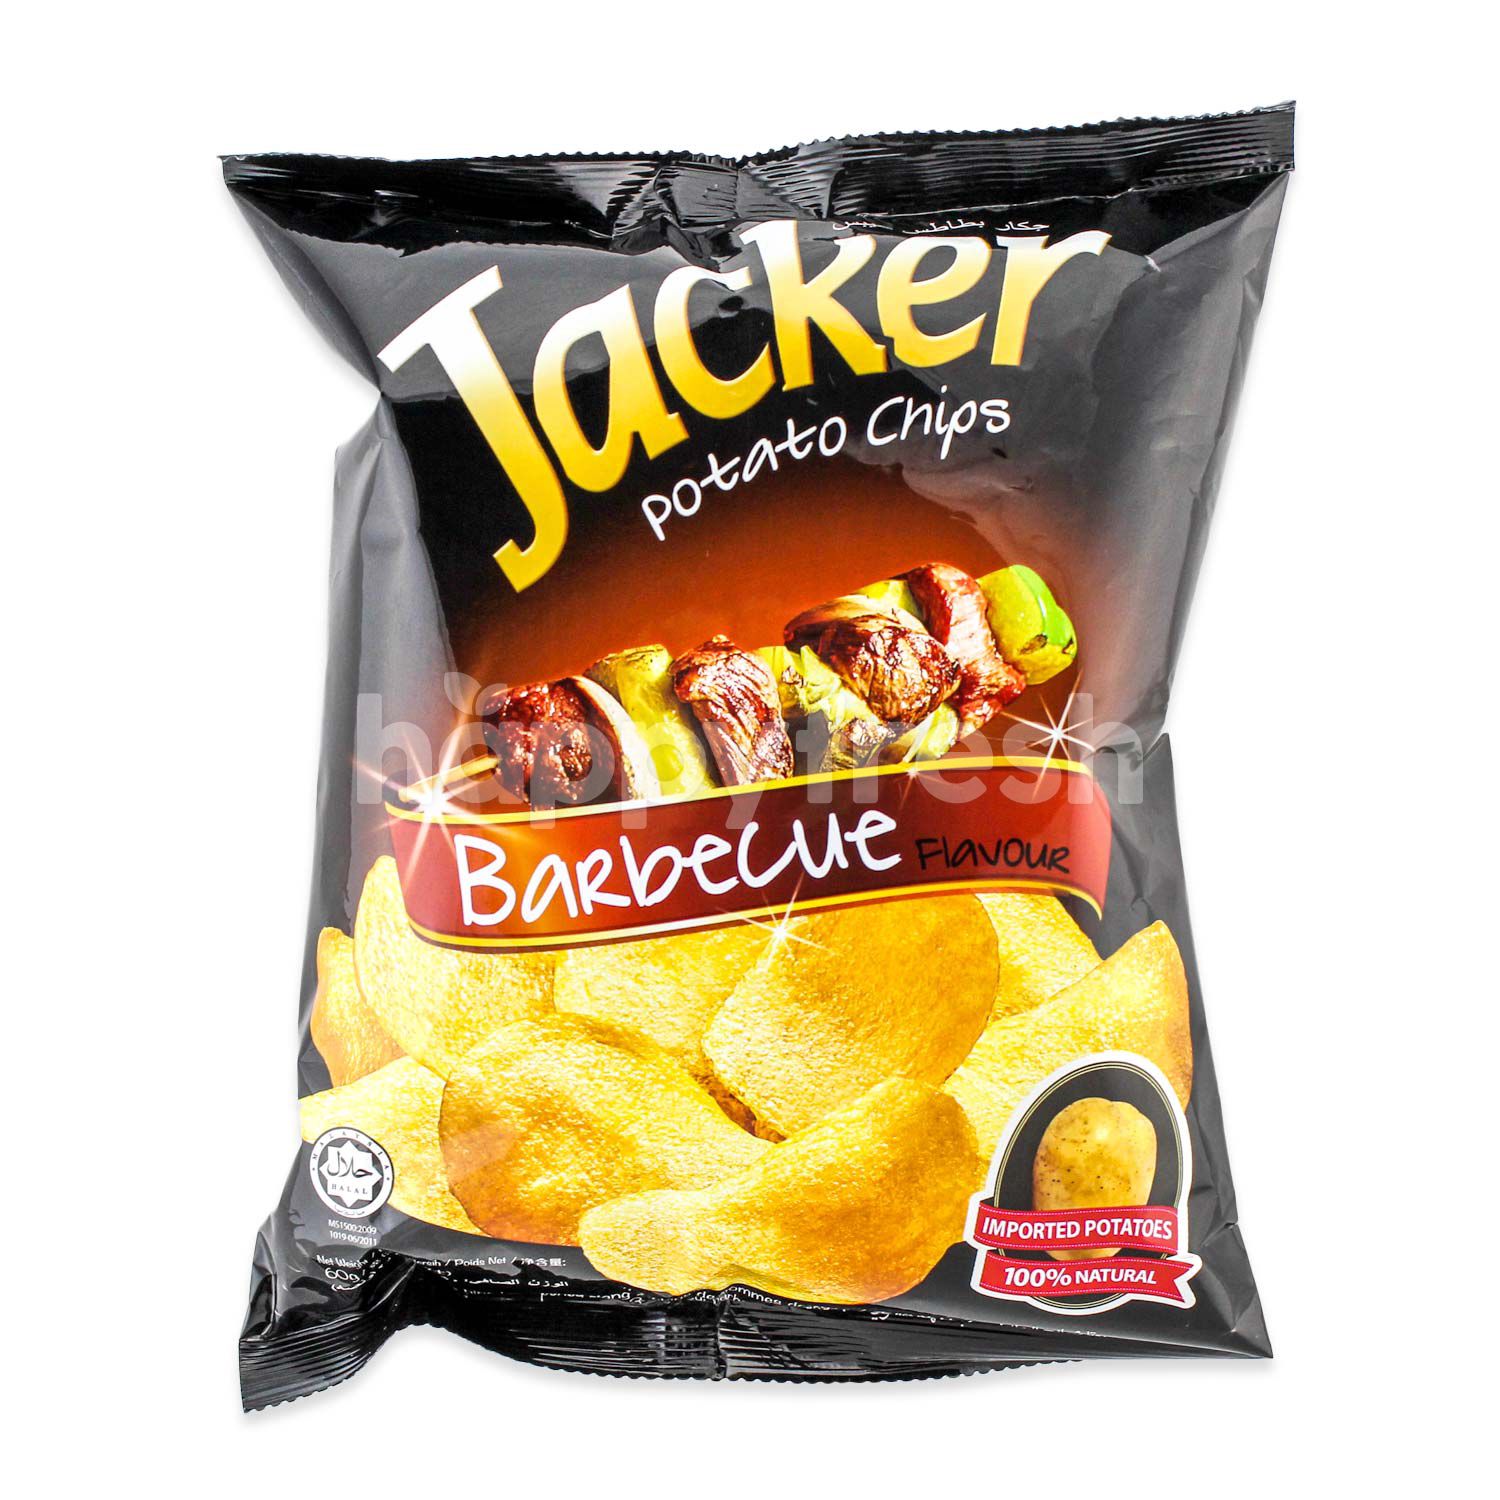 Jacker chips